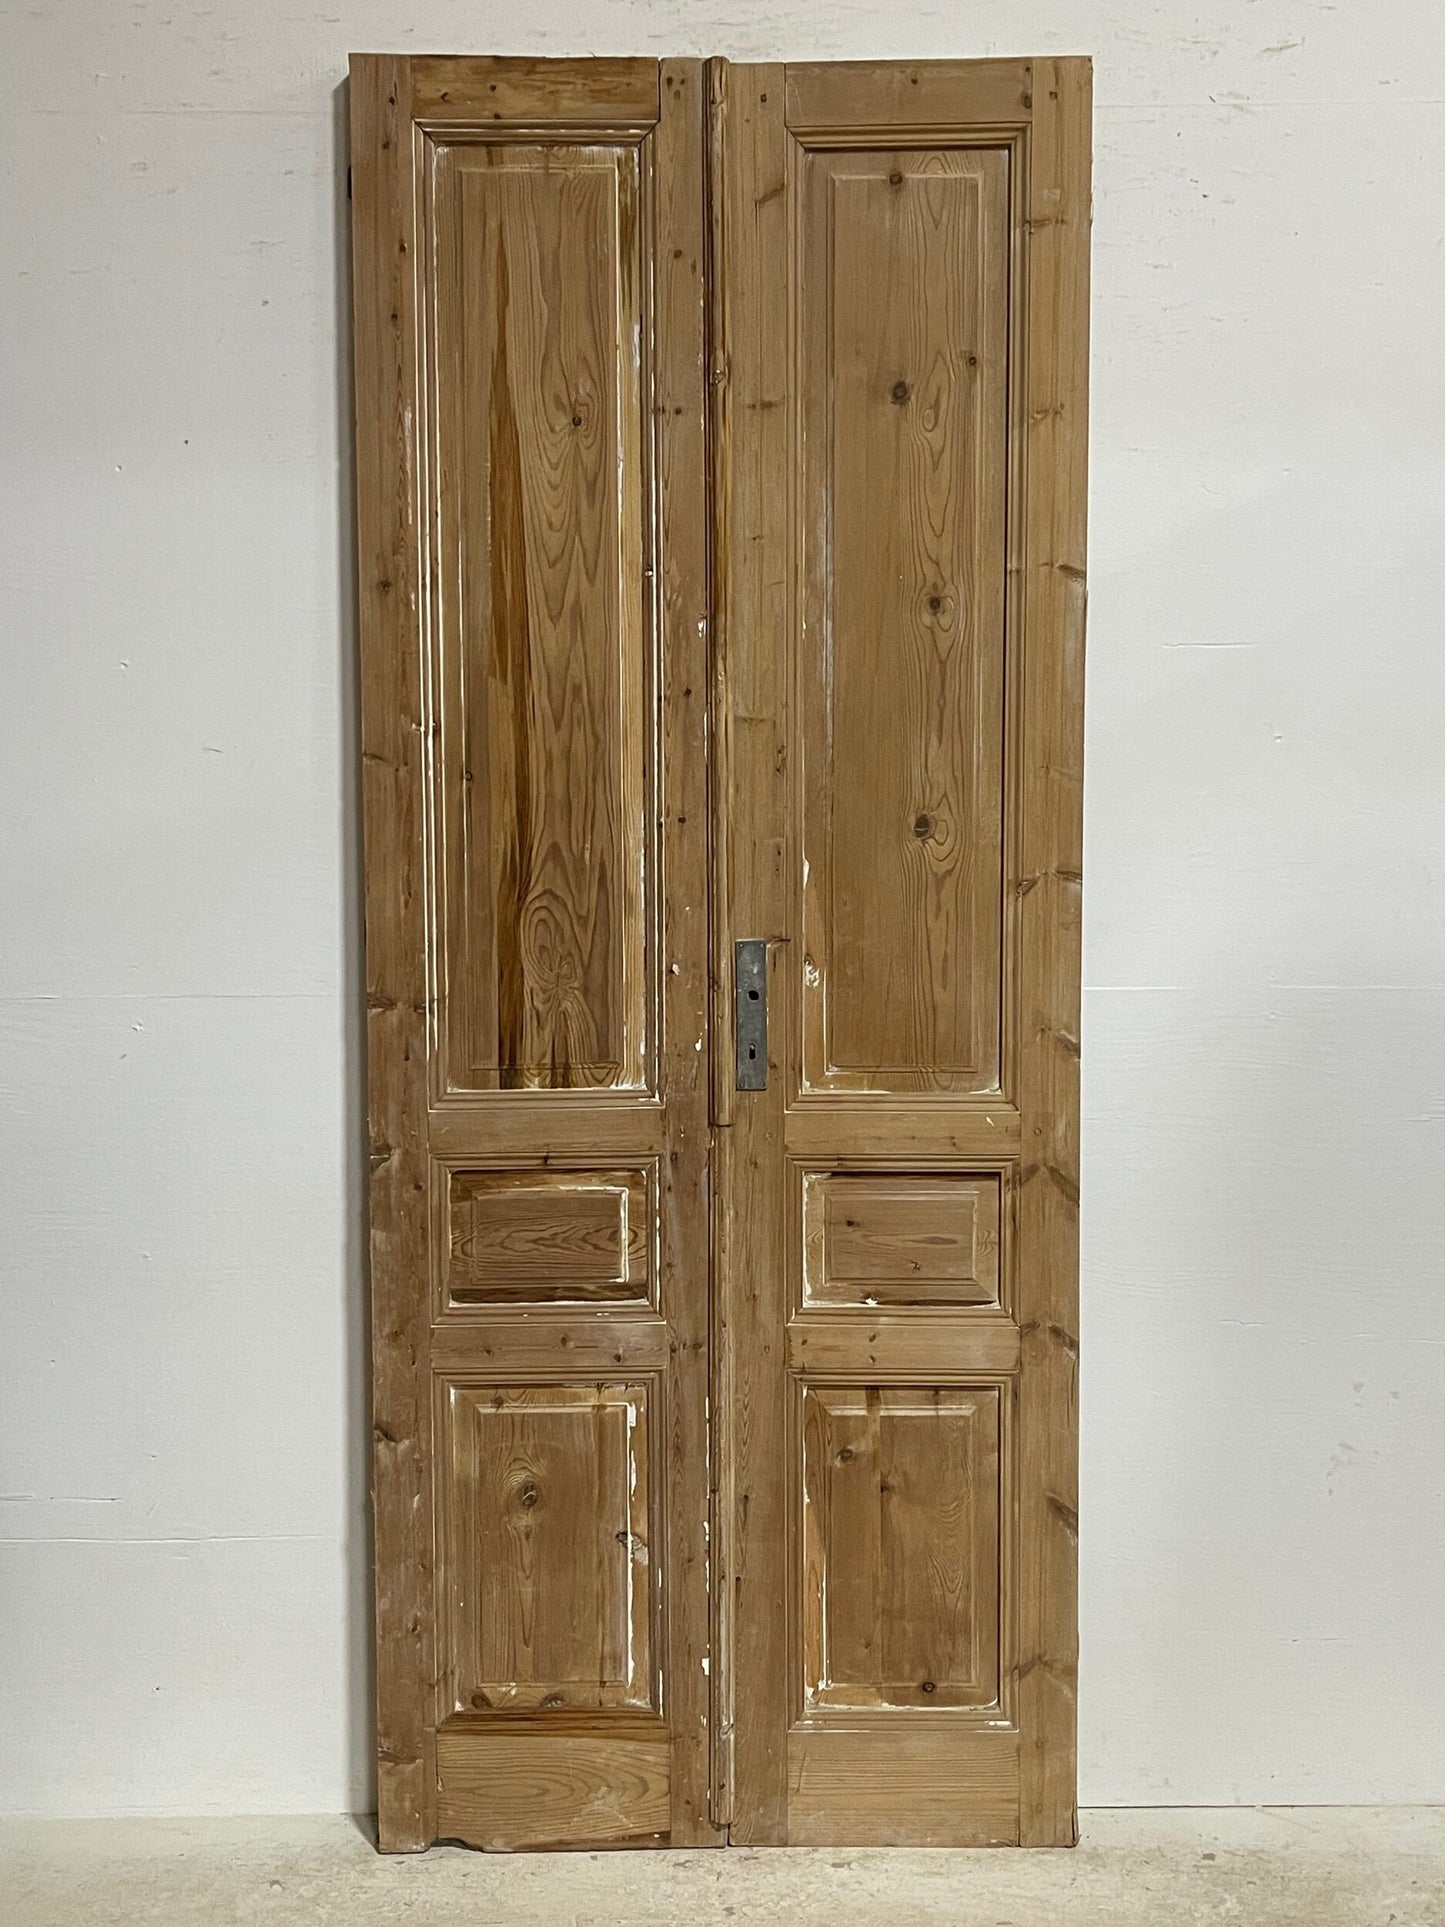 Antique French doors (98x39.5) H0118s